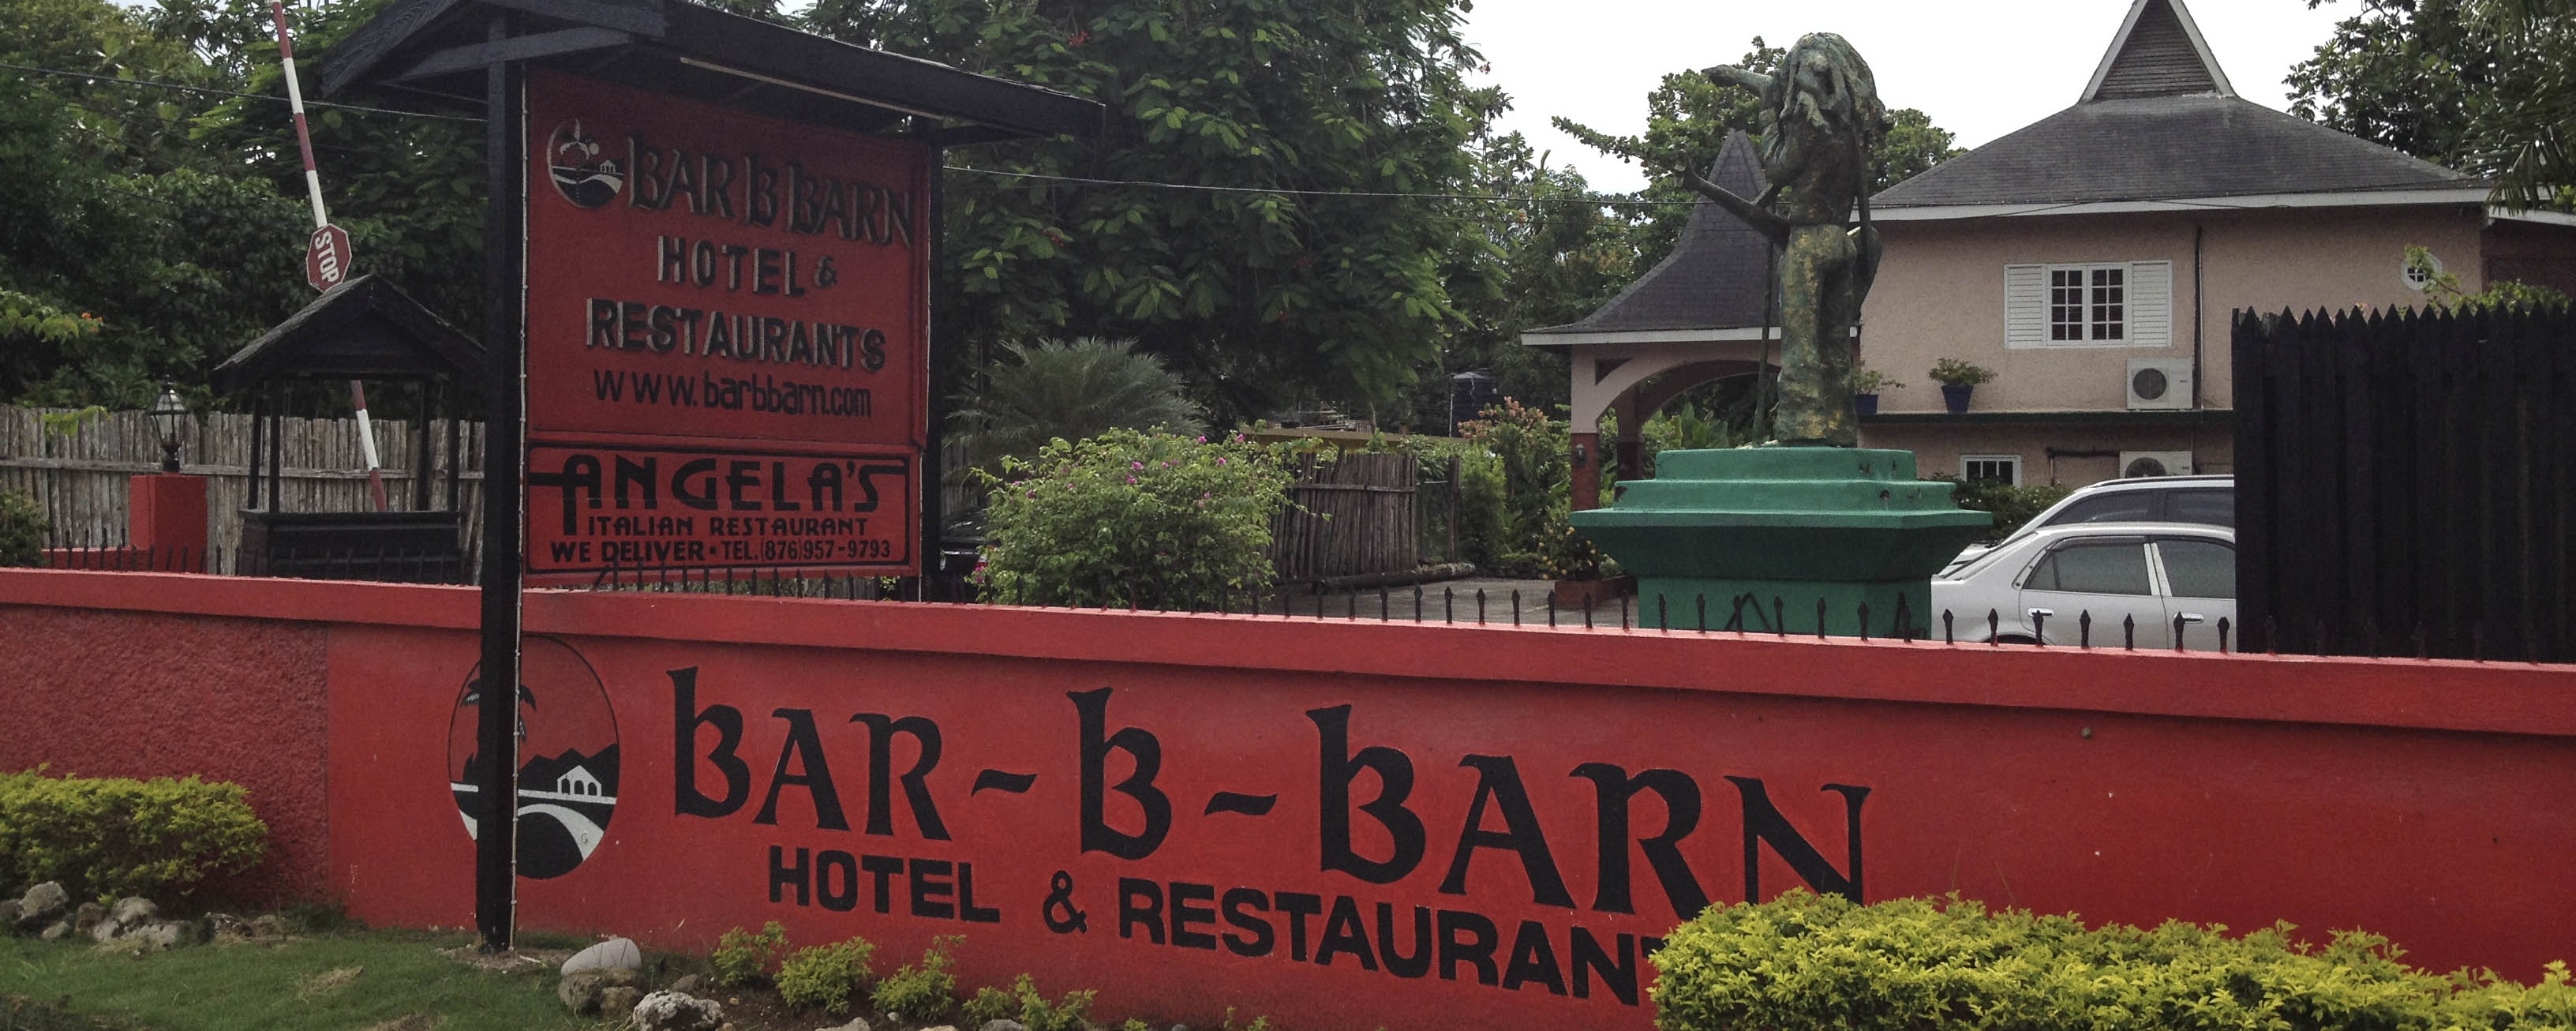 Bar-B-Bar Restaurant, Norman Manley Boulevard, Negril Jamaica